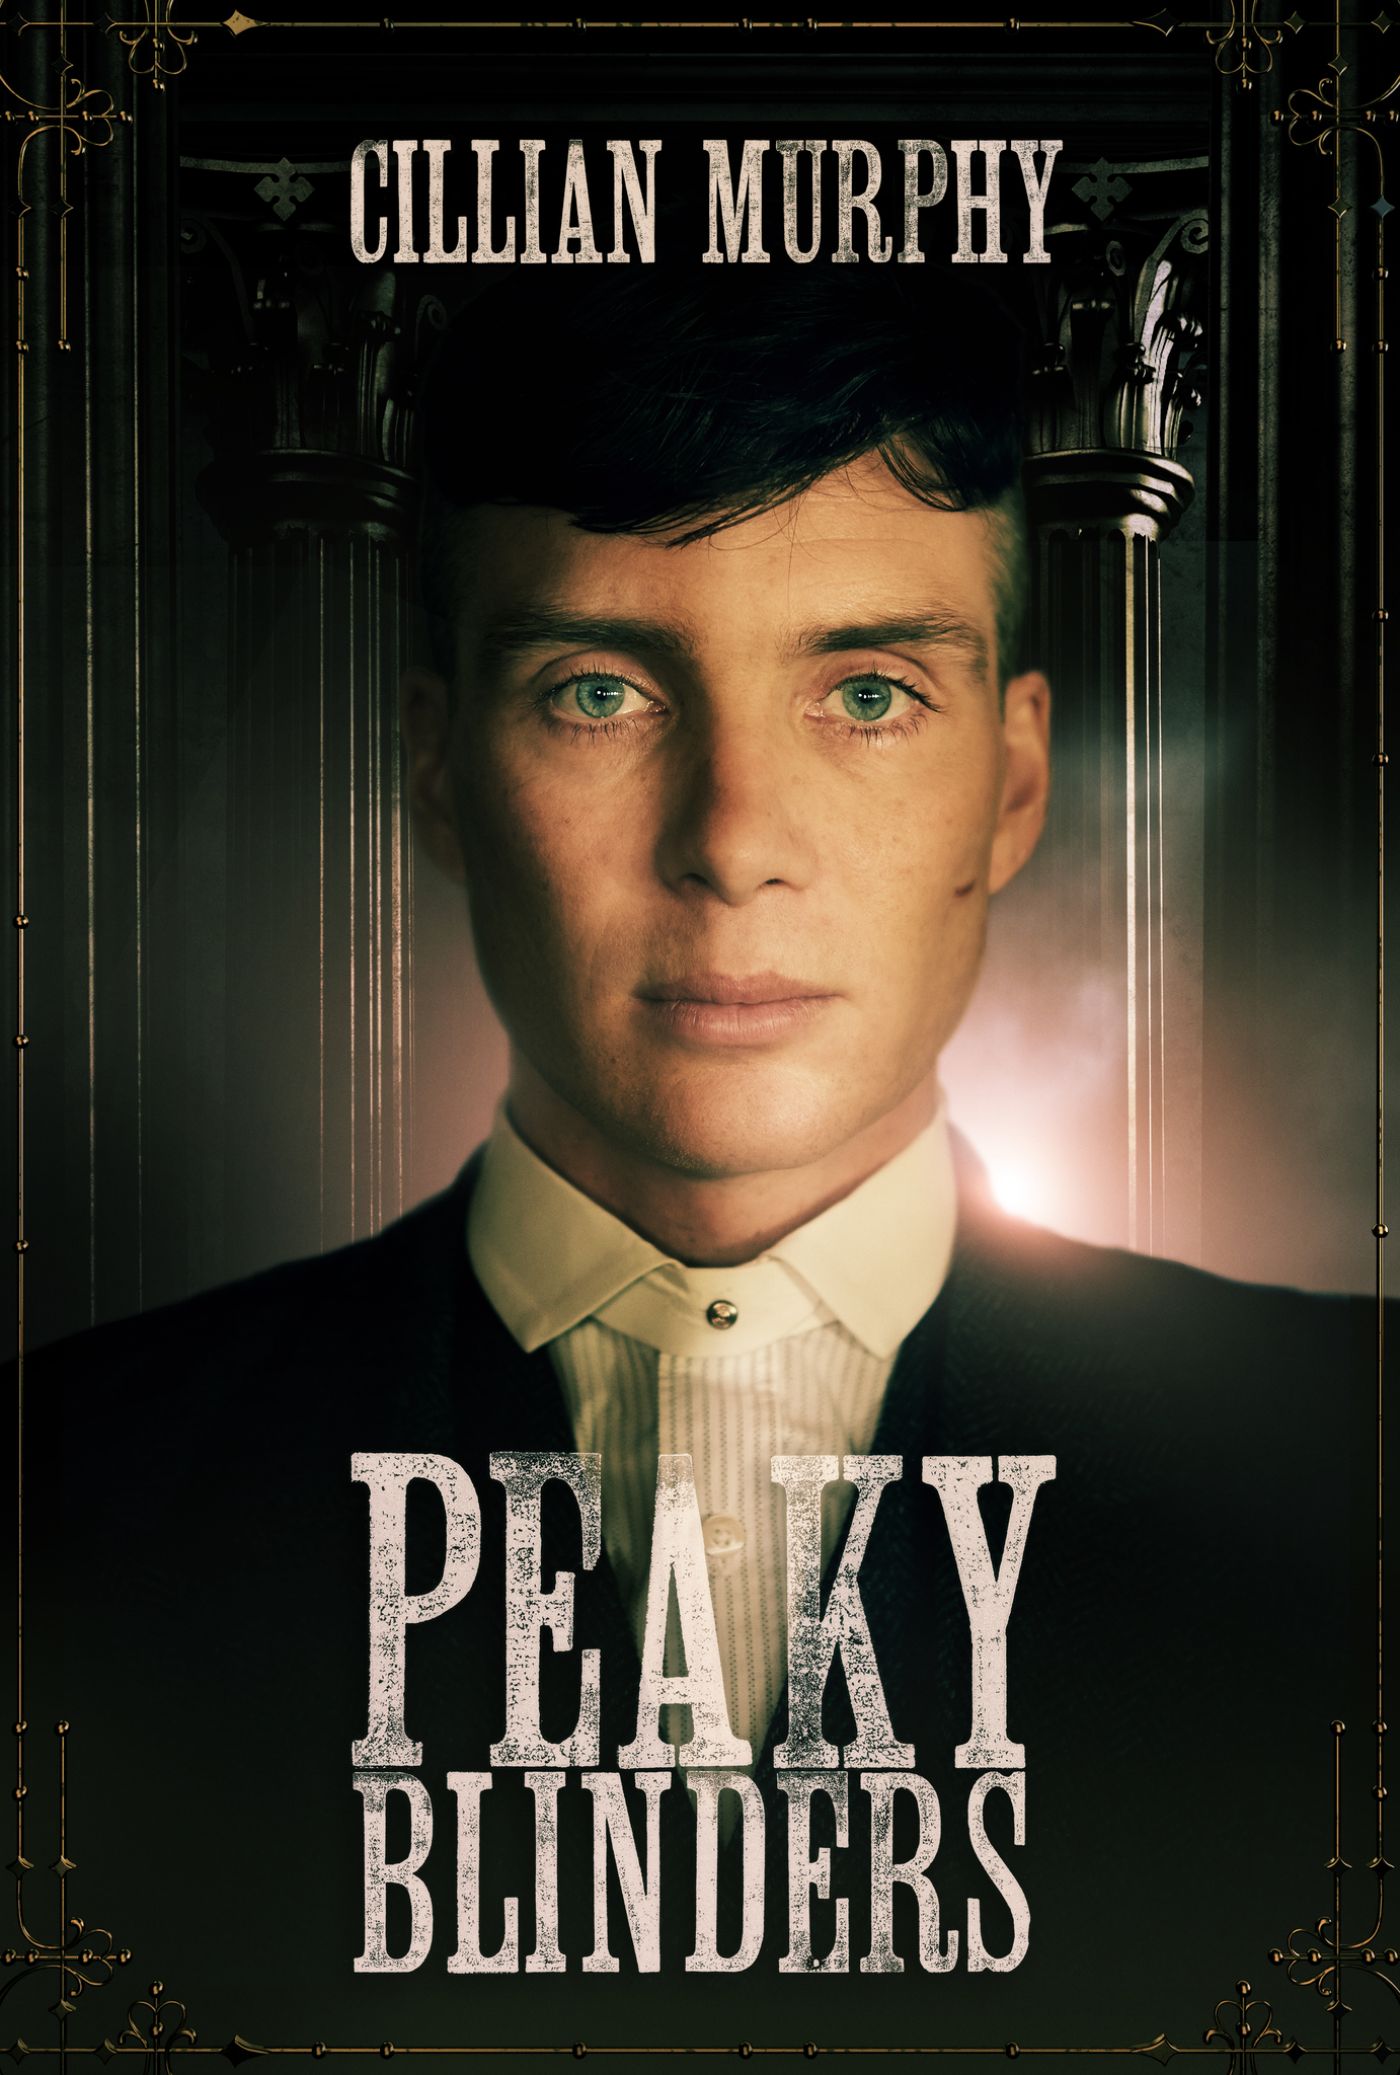 Peaky Blinders Season Web Series 2016 Release Date Review Cast Trailer Watch Online At 